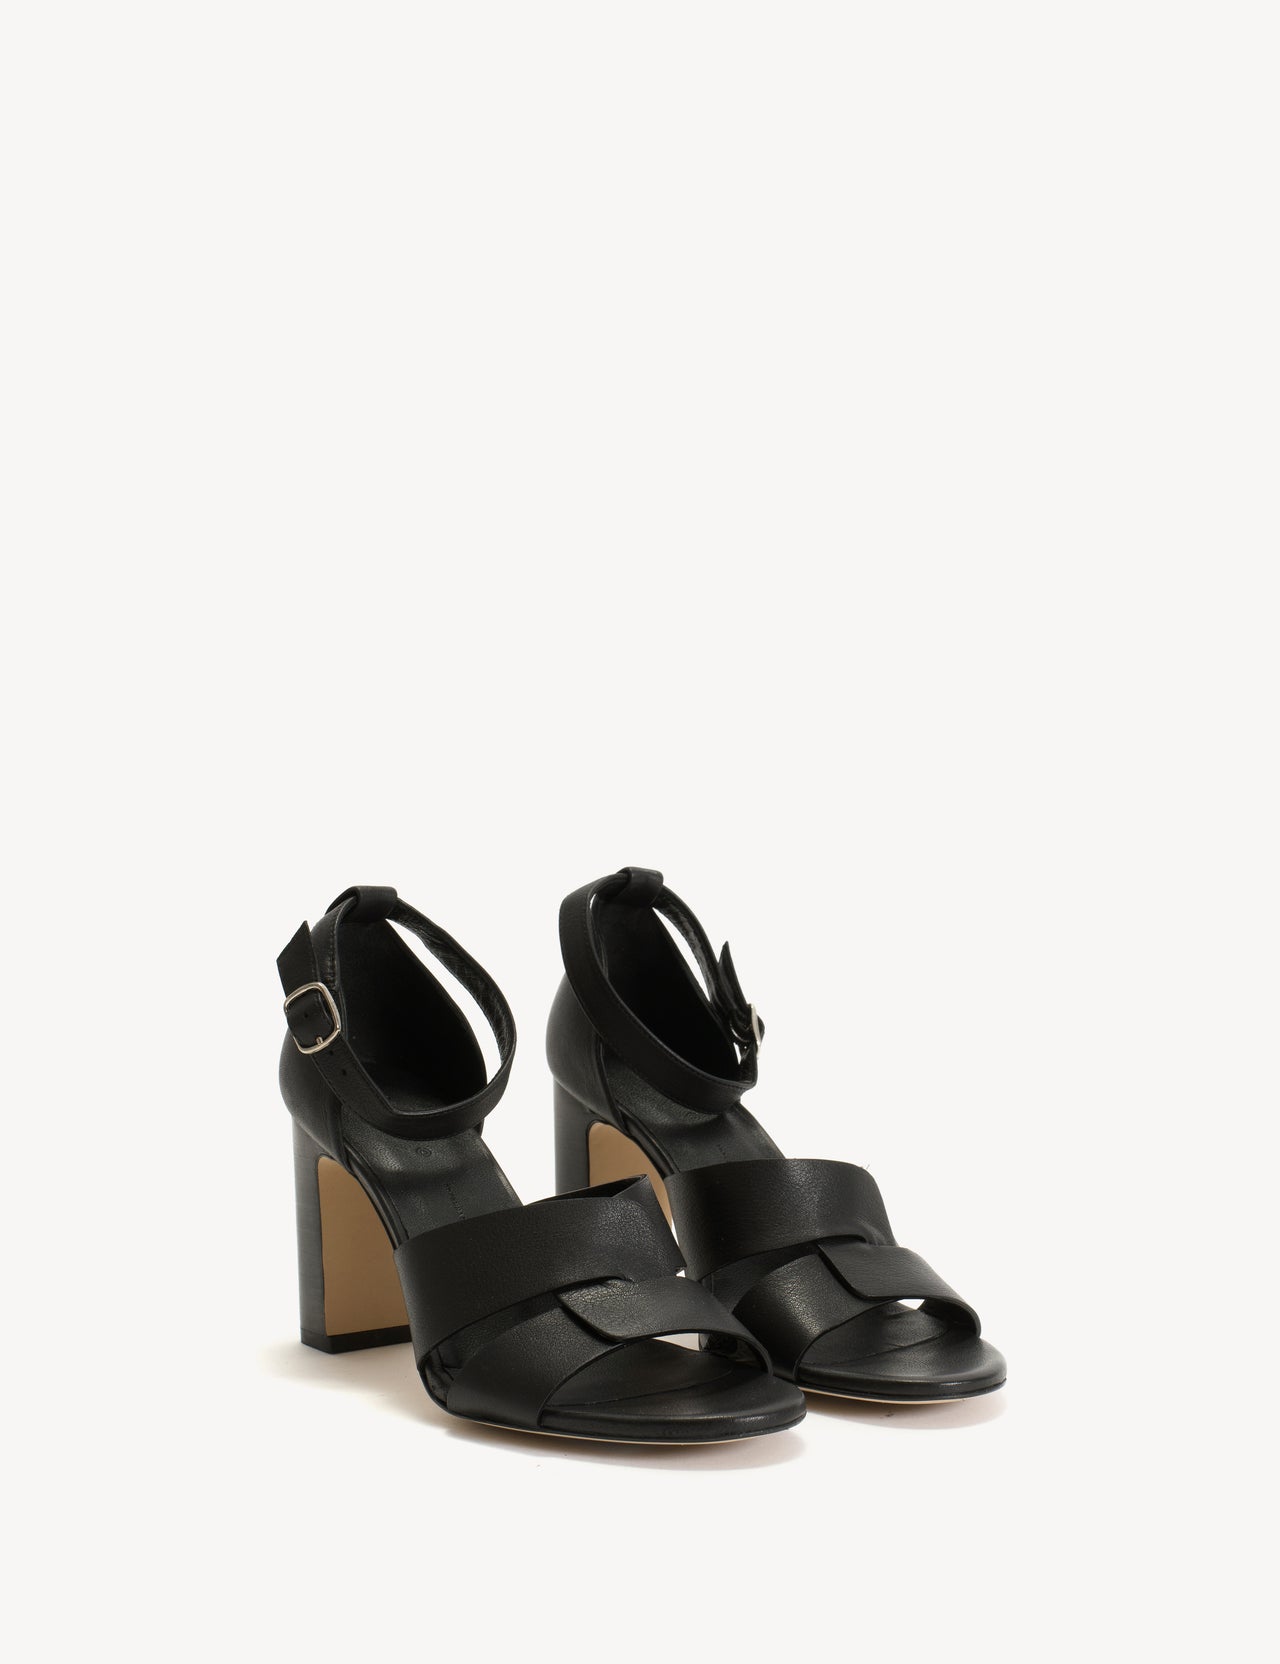 Lulu Sandal In Black Calfskin with 75mm Heel